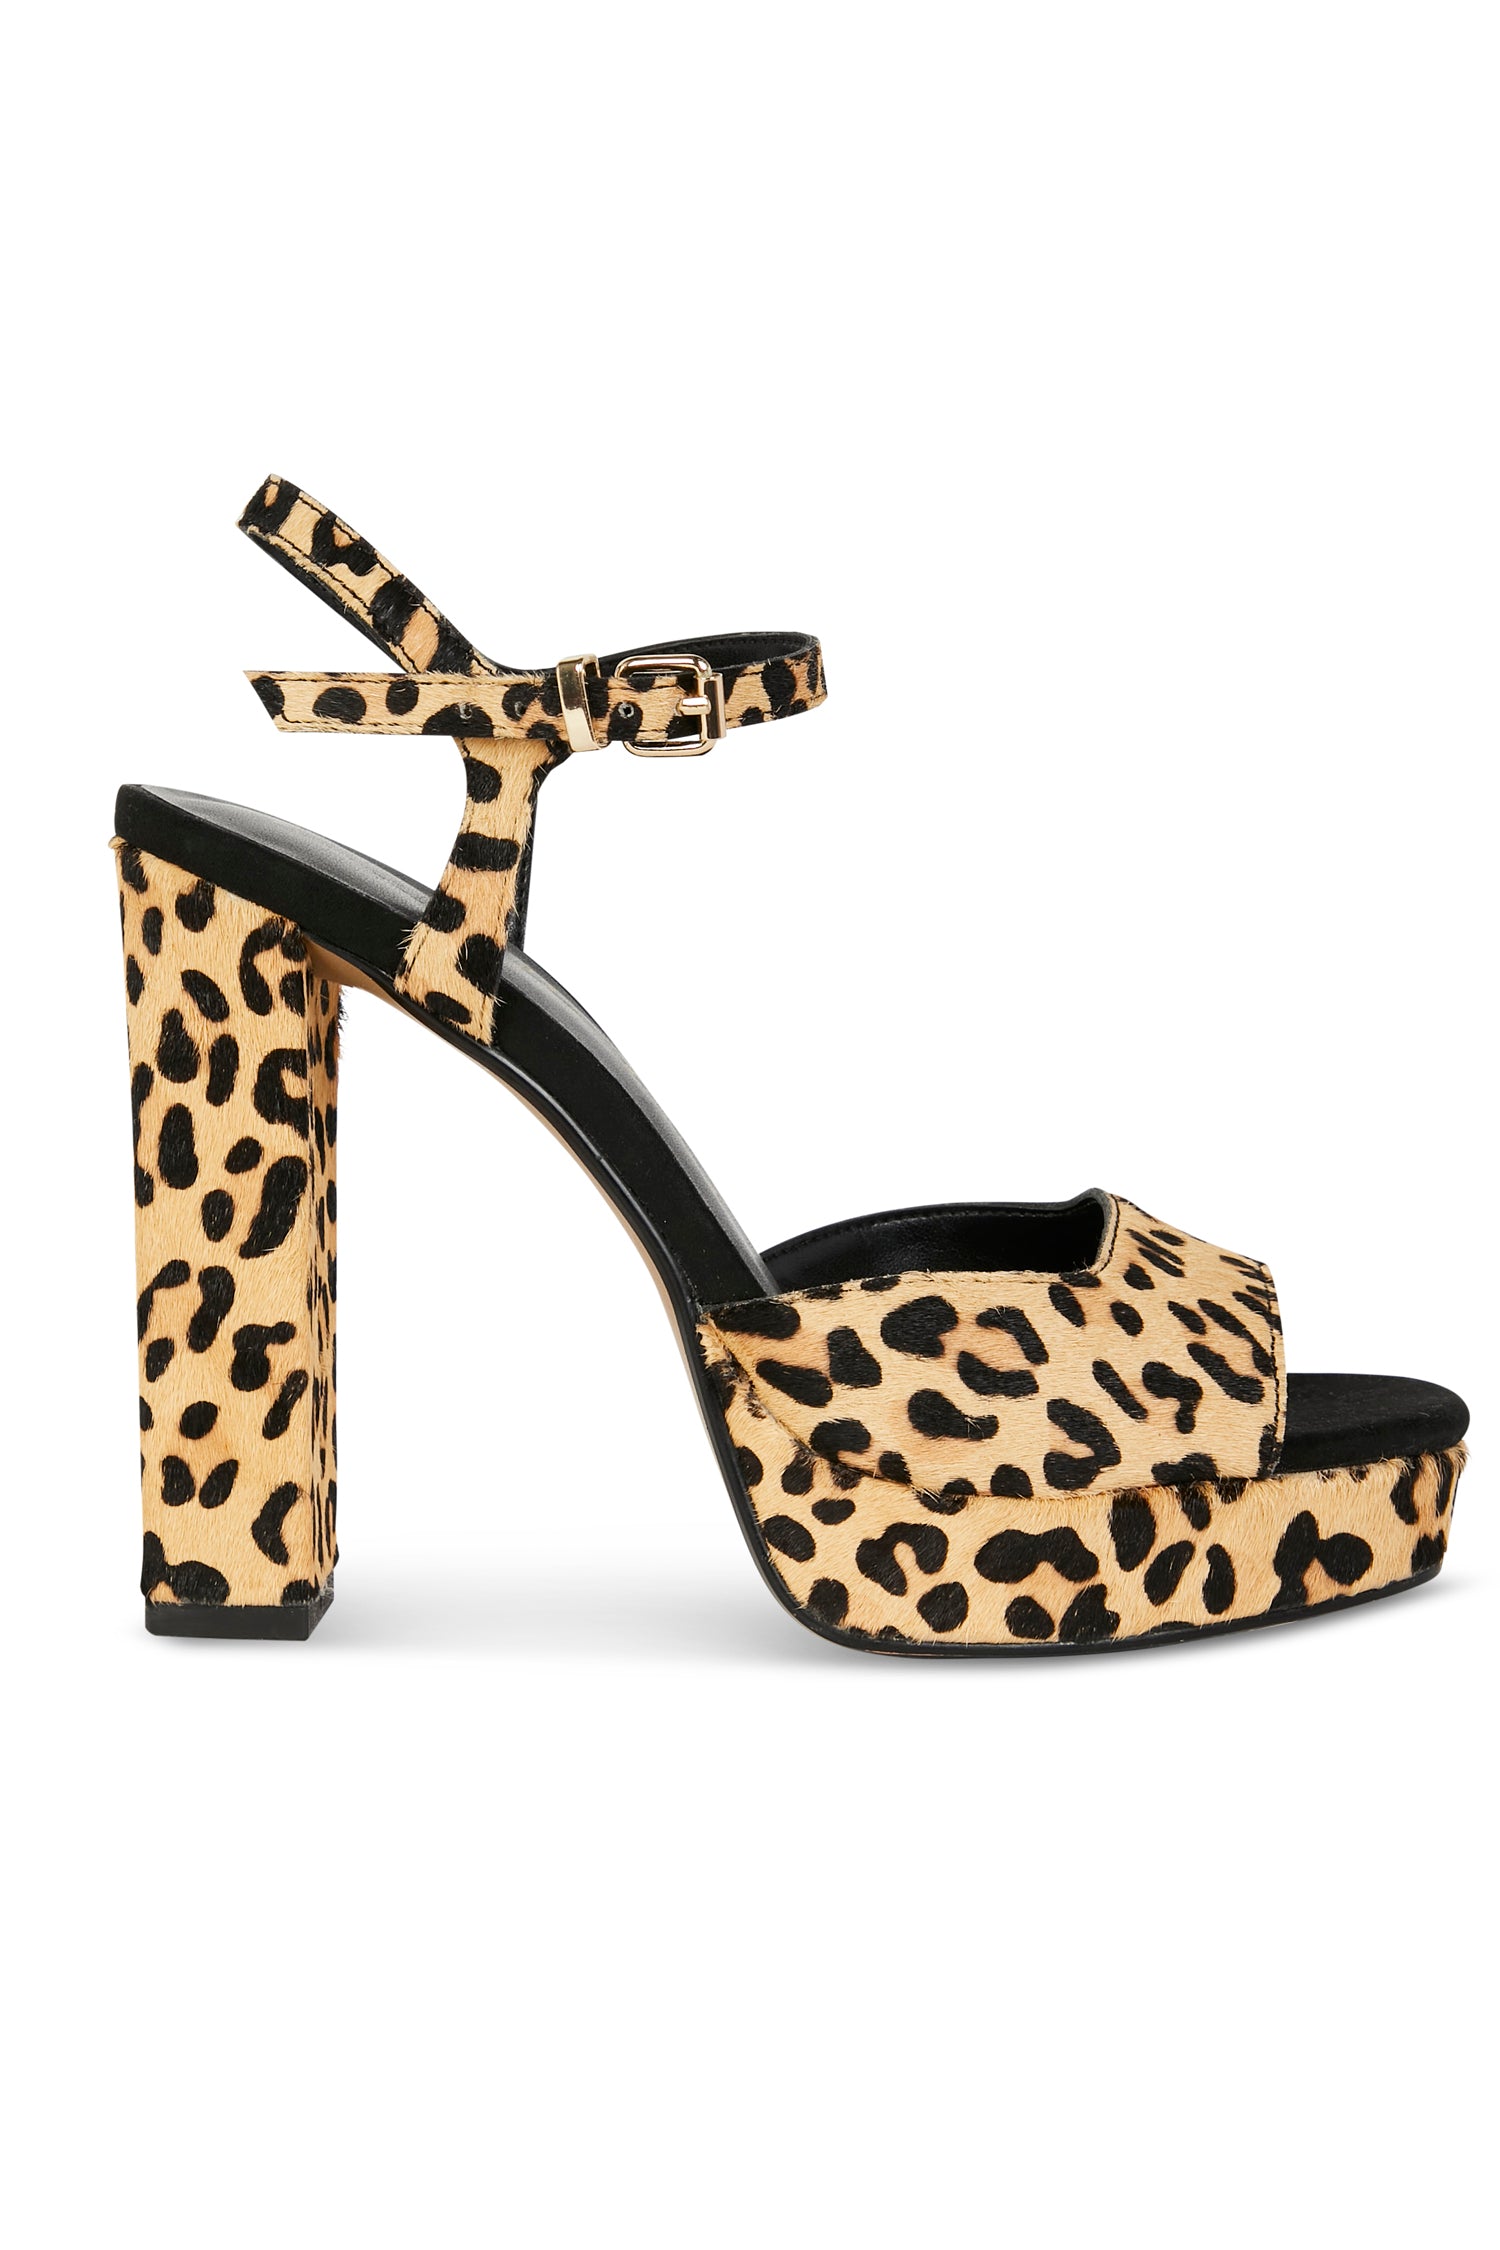 Peep Toe Heel Shoe | High Heels Shoes | Leopard Shoes | Party Shoes | Shoes  Pumps - Women - Aliexpress